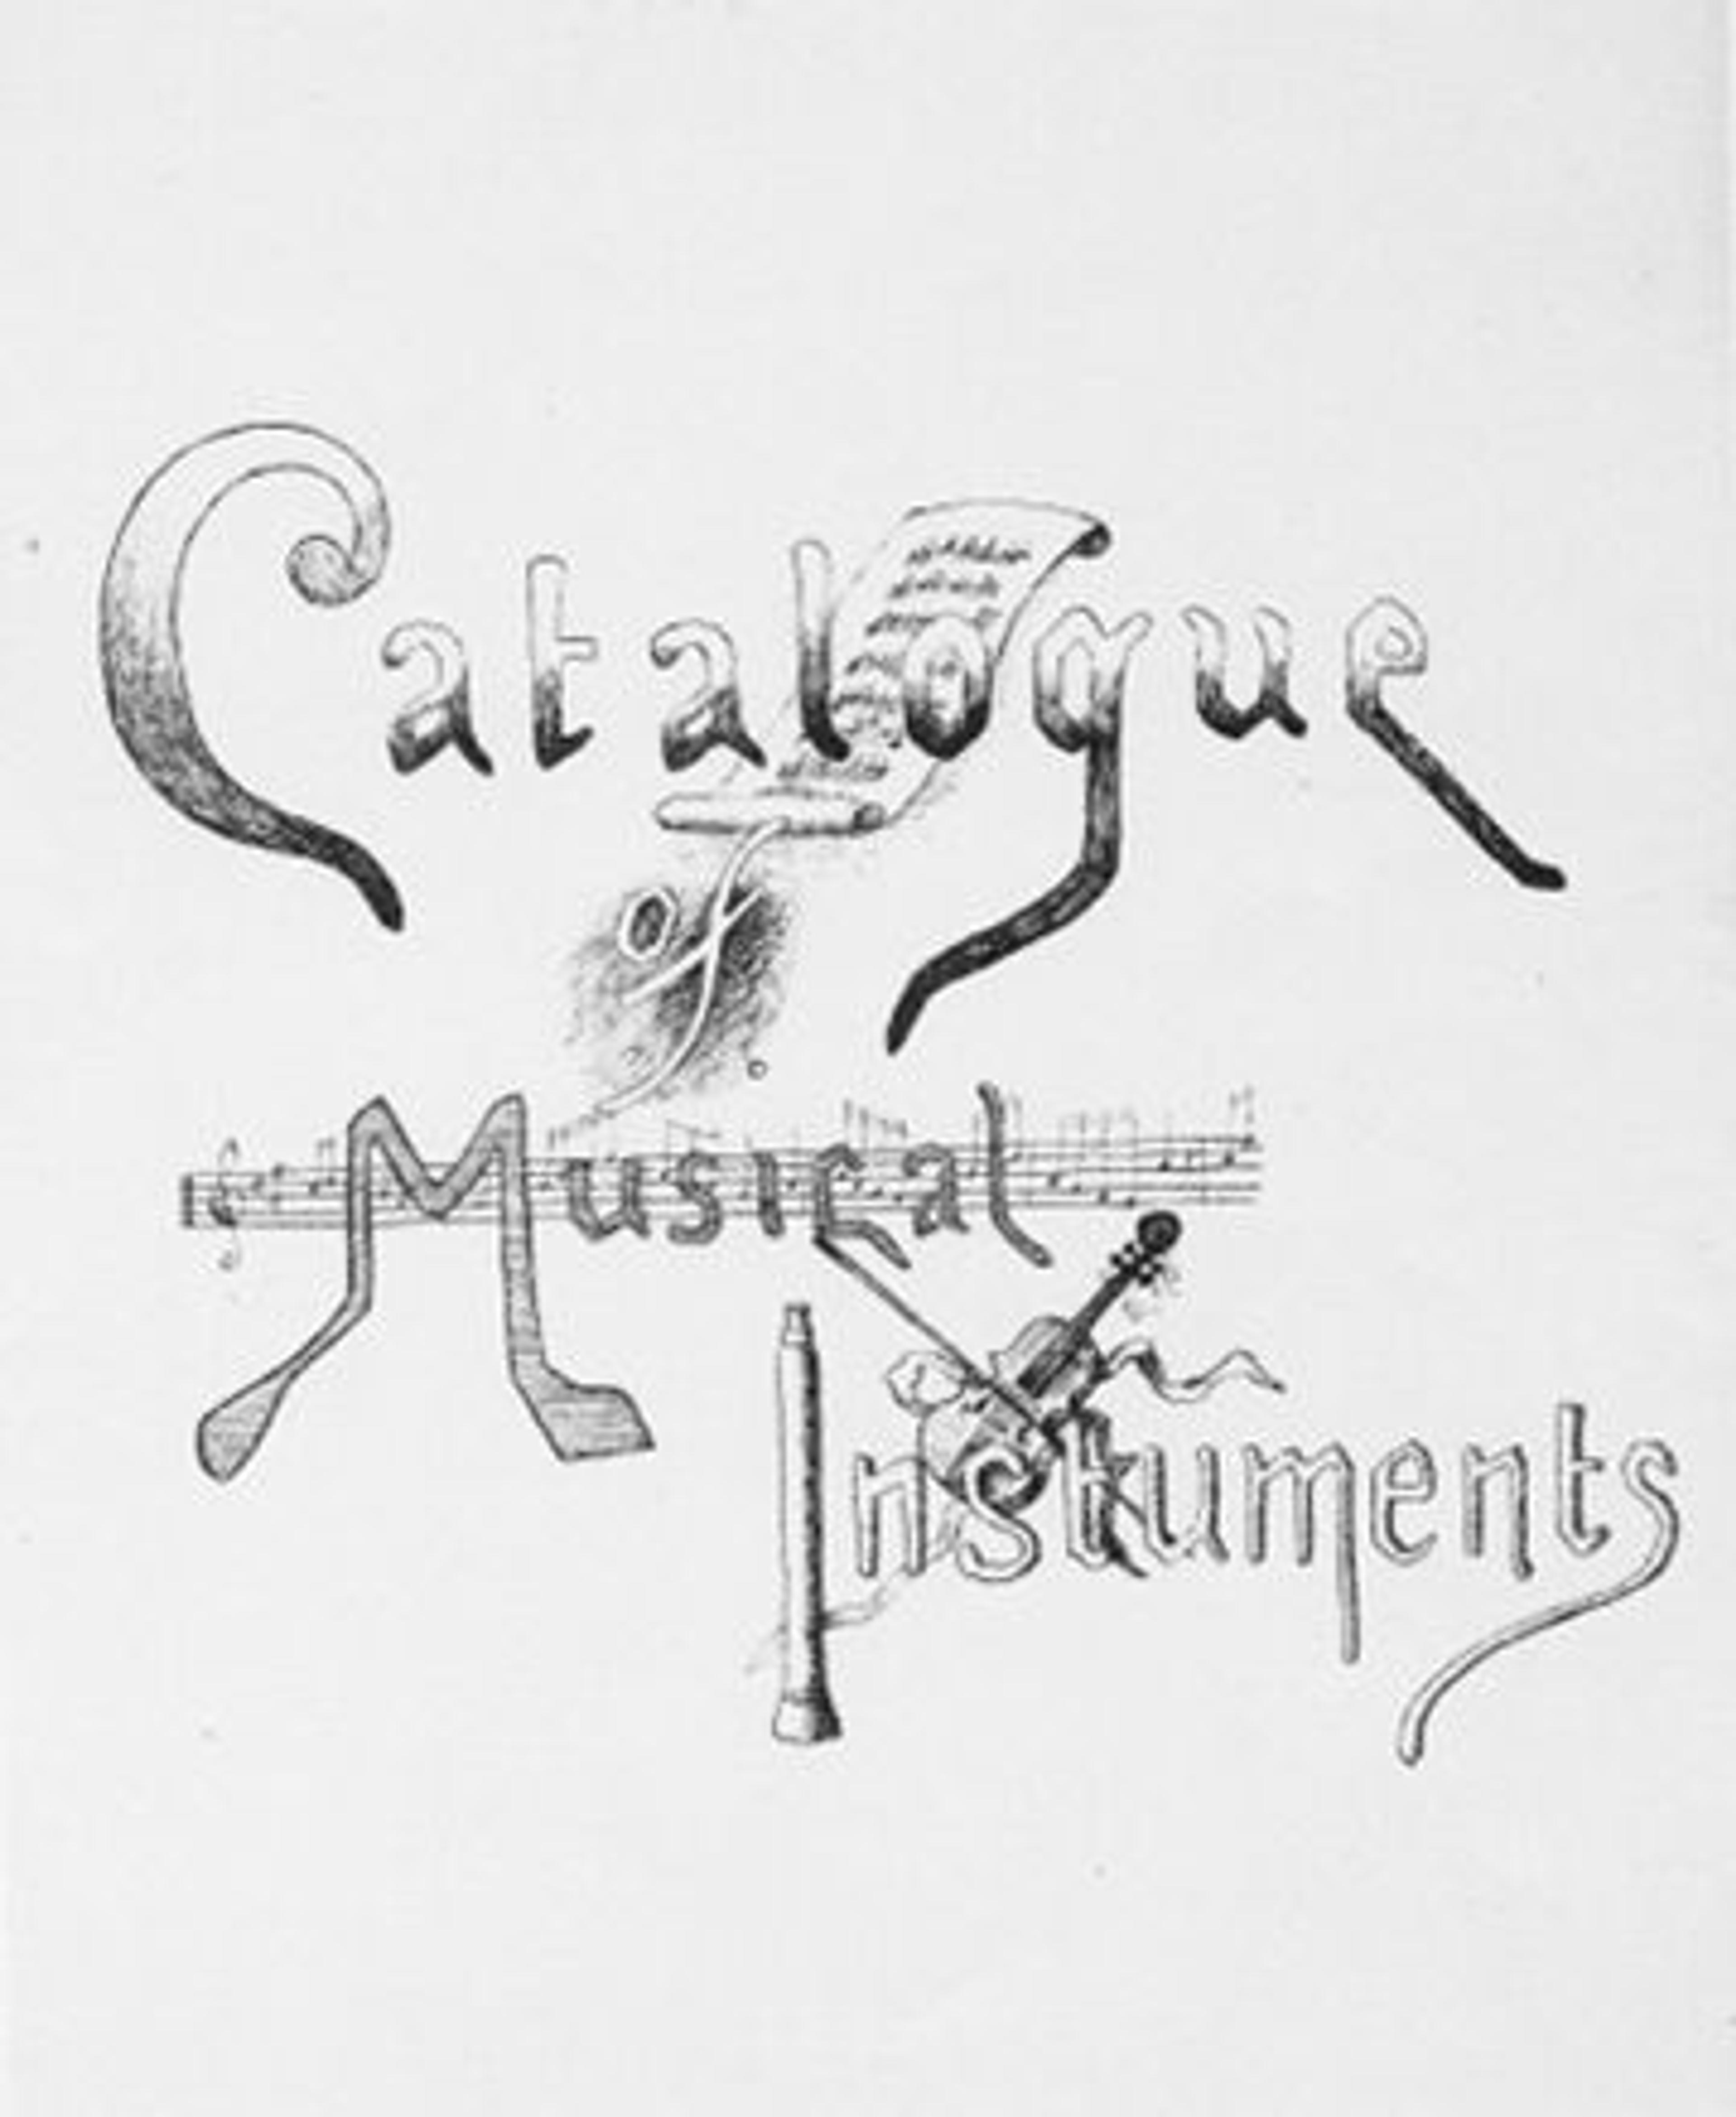 Mary Elizabeth Adams Brown, Catalogue of Musical Instruments